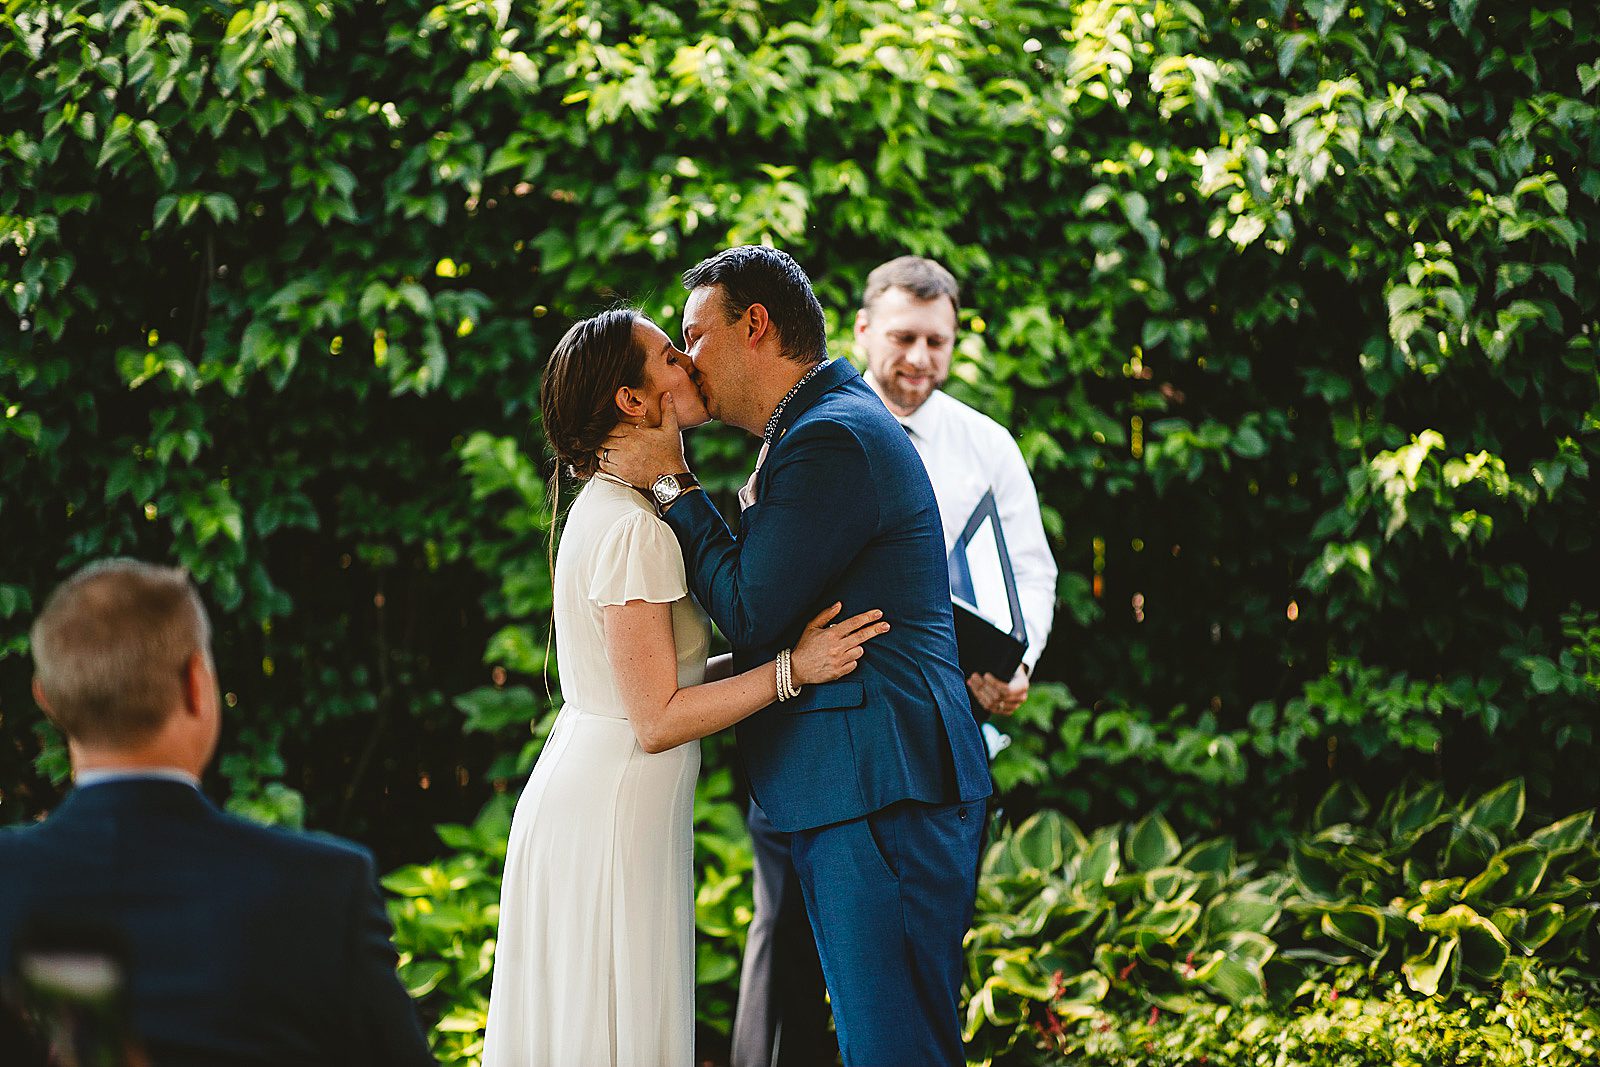 22 first kiss in back yard wedding - Amazing Wedding in Backyard // Kristen + Jeff